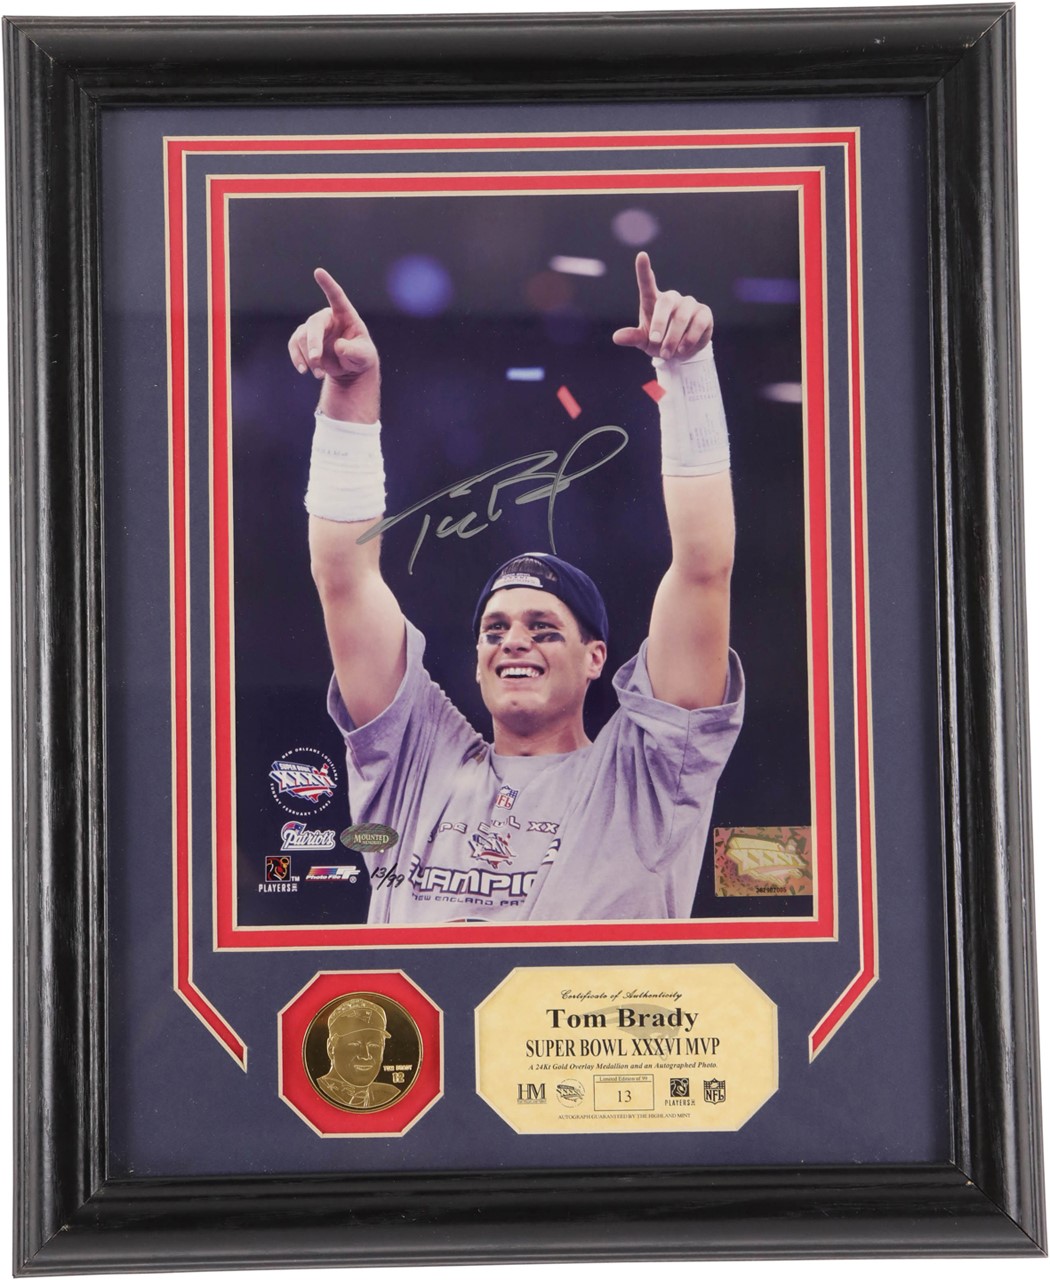 - Tom Brady Signed Super Bowl XXXVI MVP Photograph Display LE 13/99 (Mounted Memories)